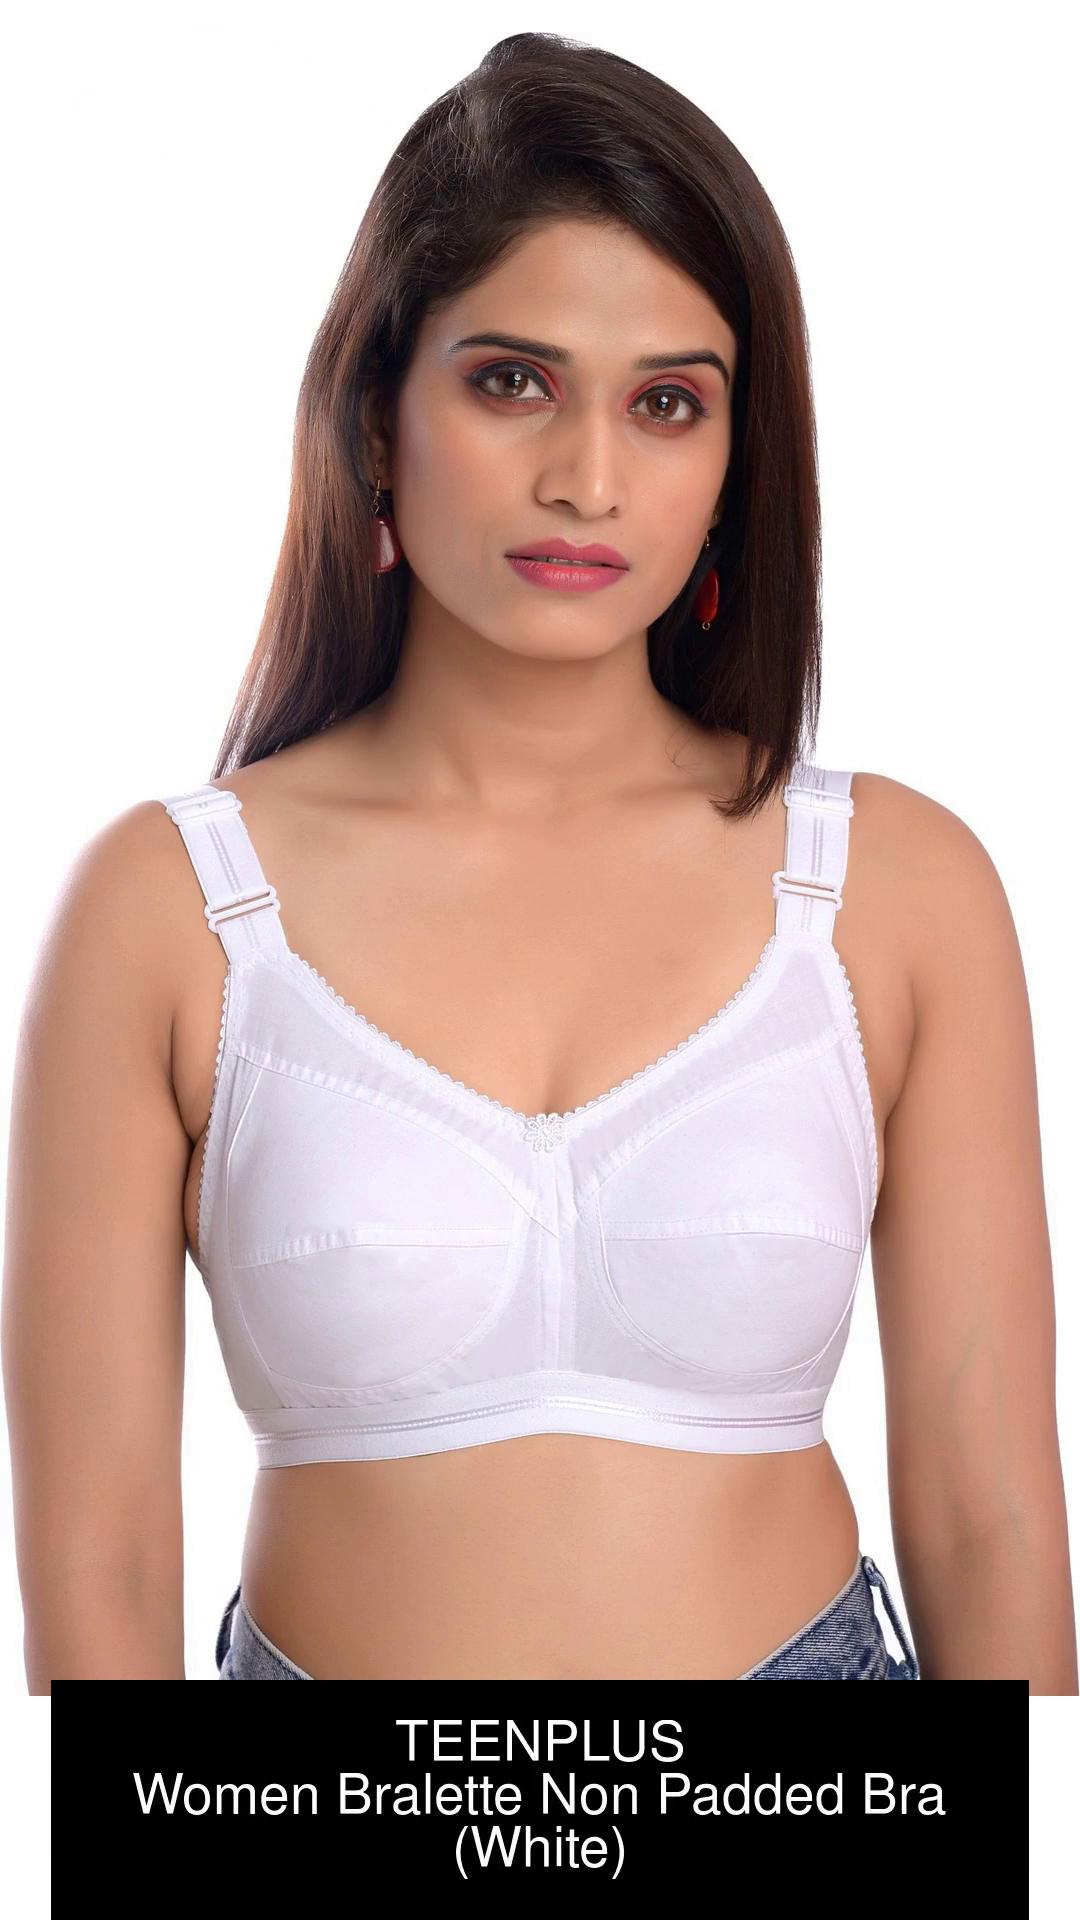 TEENPLUS style cotton bra non padded full support bra for